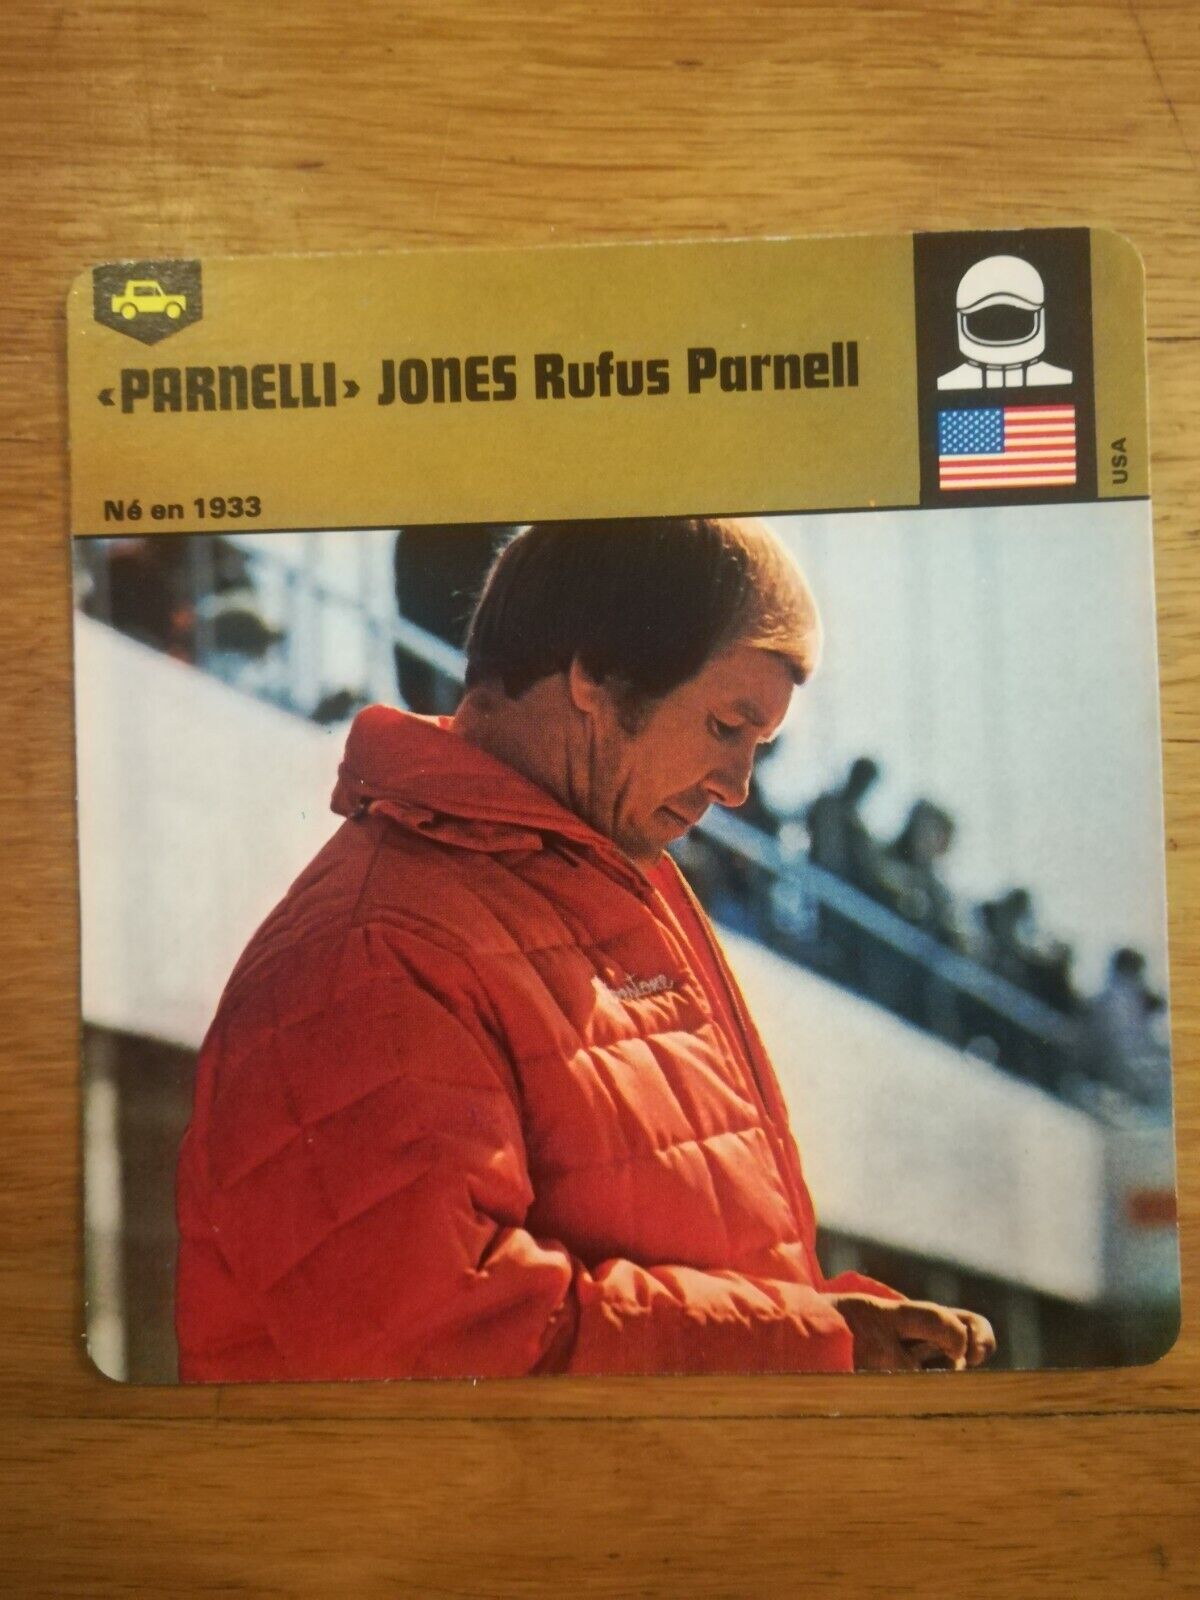 12 x 12.5 cm Auto Card Driver Plug - Parnelli jones rufus parnell